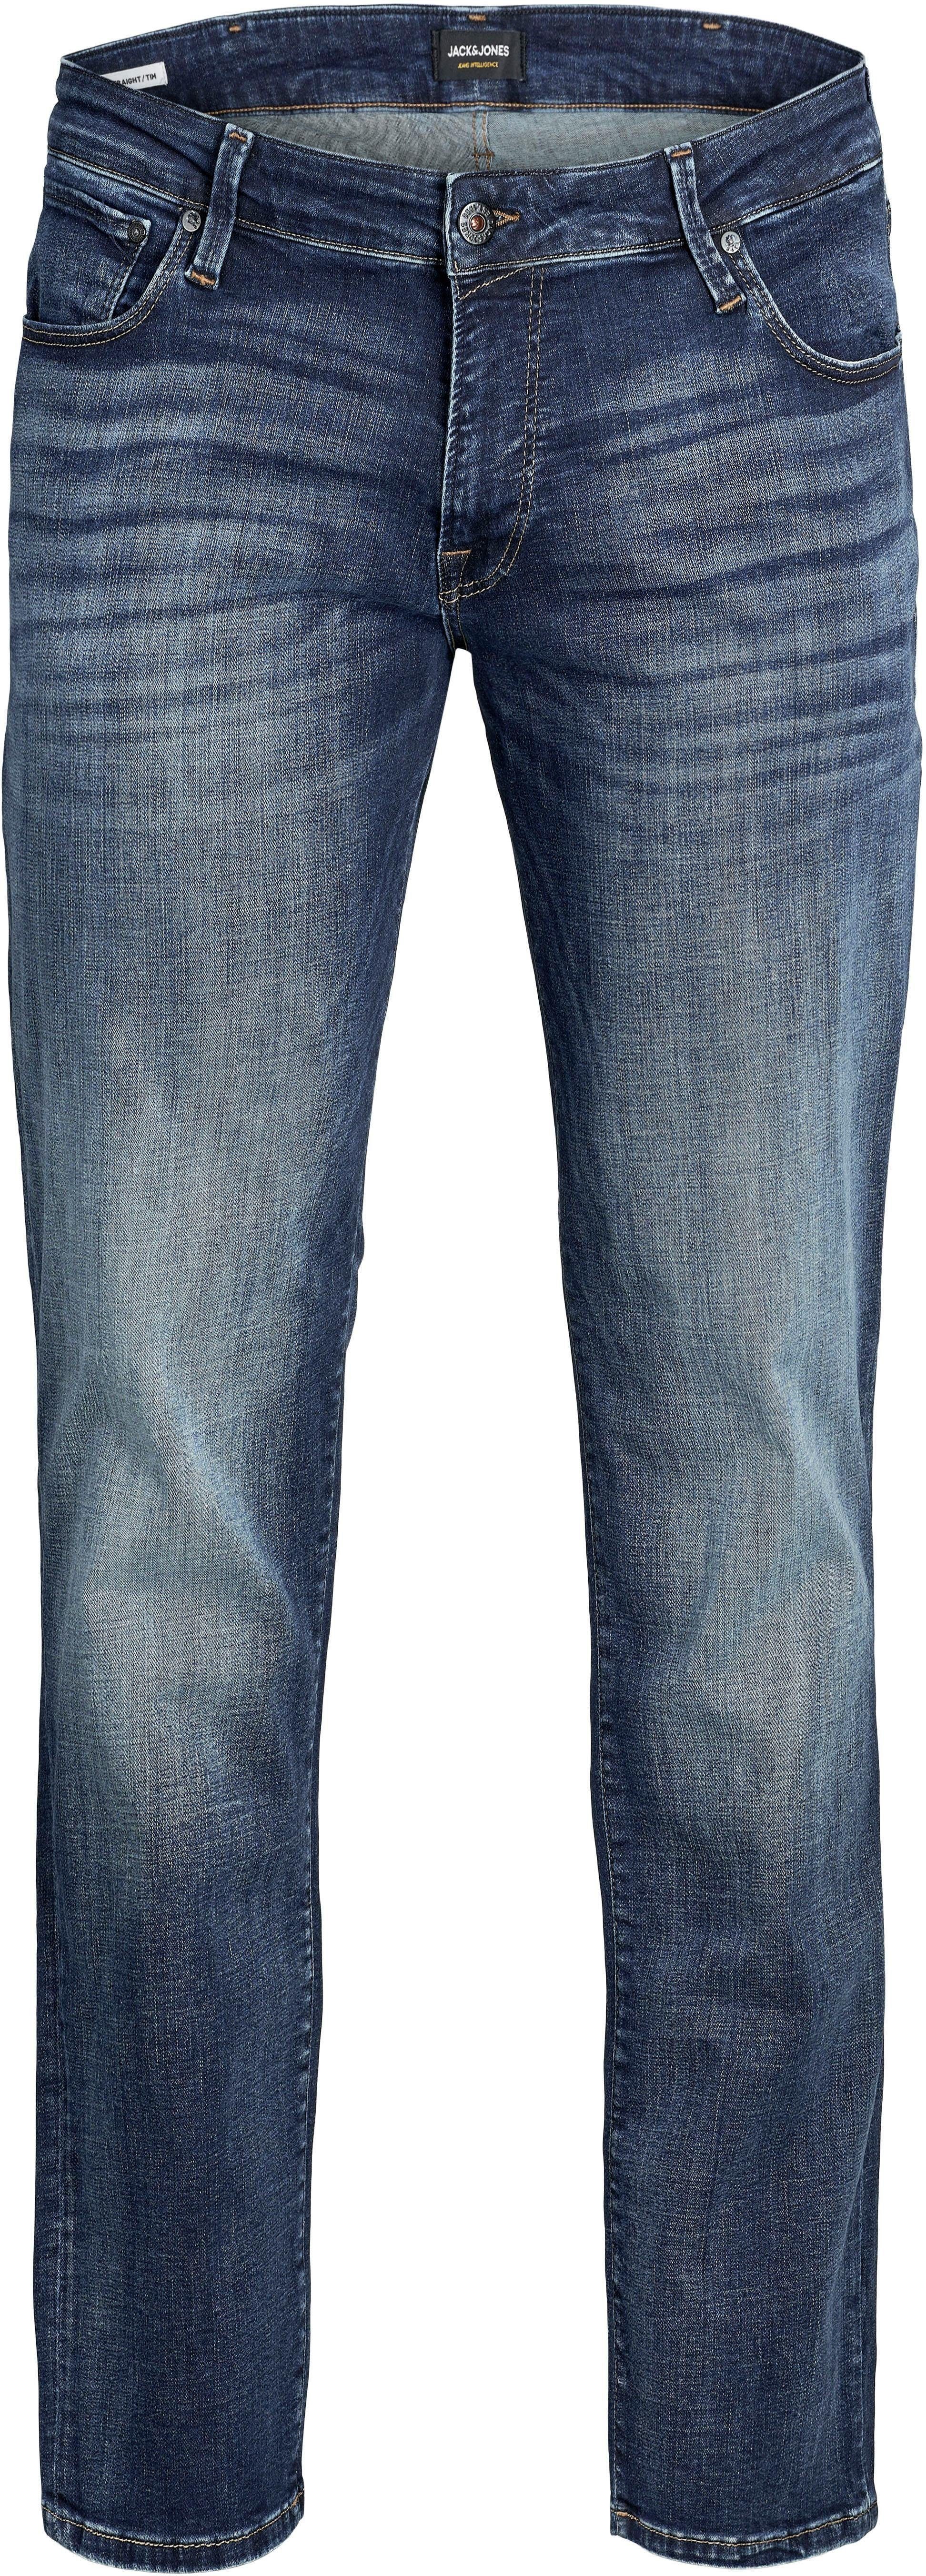 Tim PlusSize Jack blue Icon 52 bis Weite Slim-fit-Jeans & Jones Jeans denim